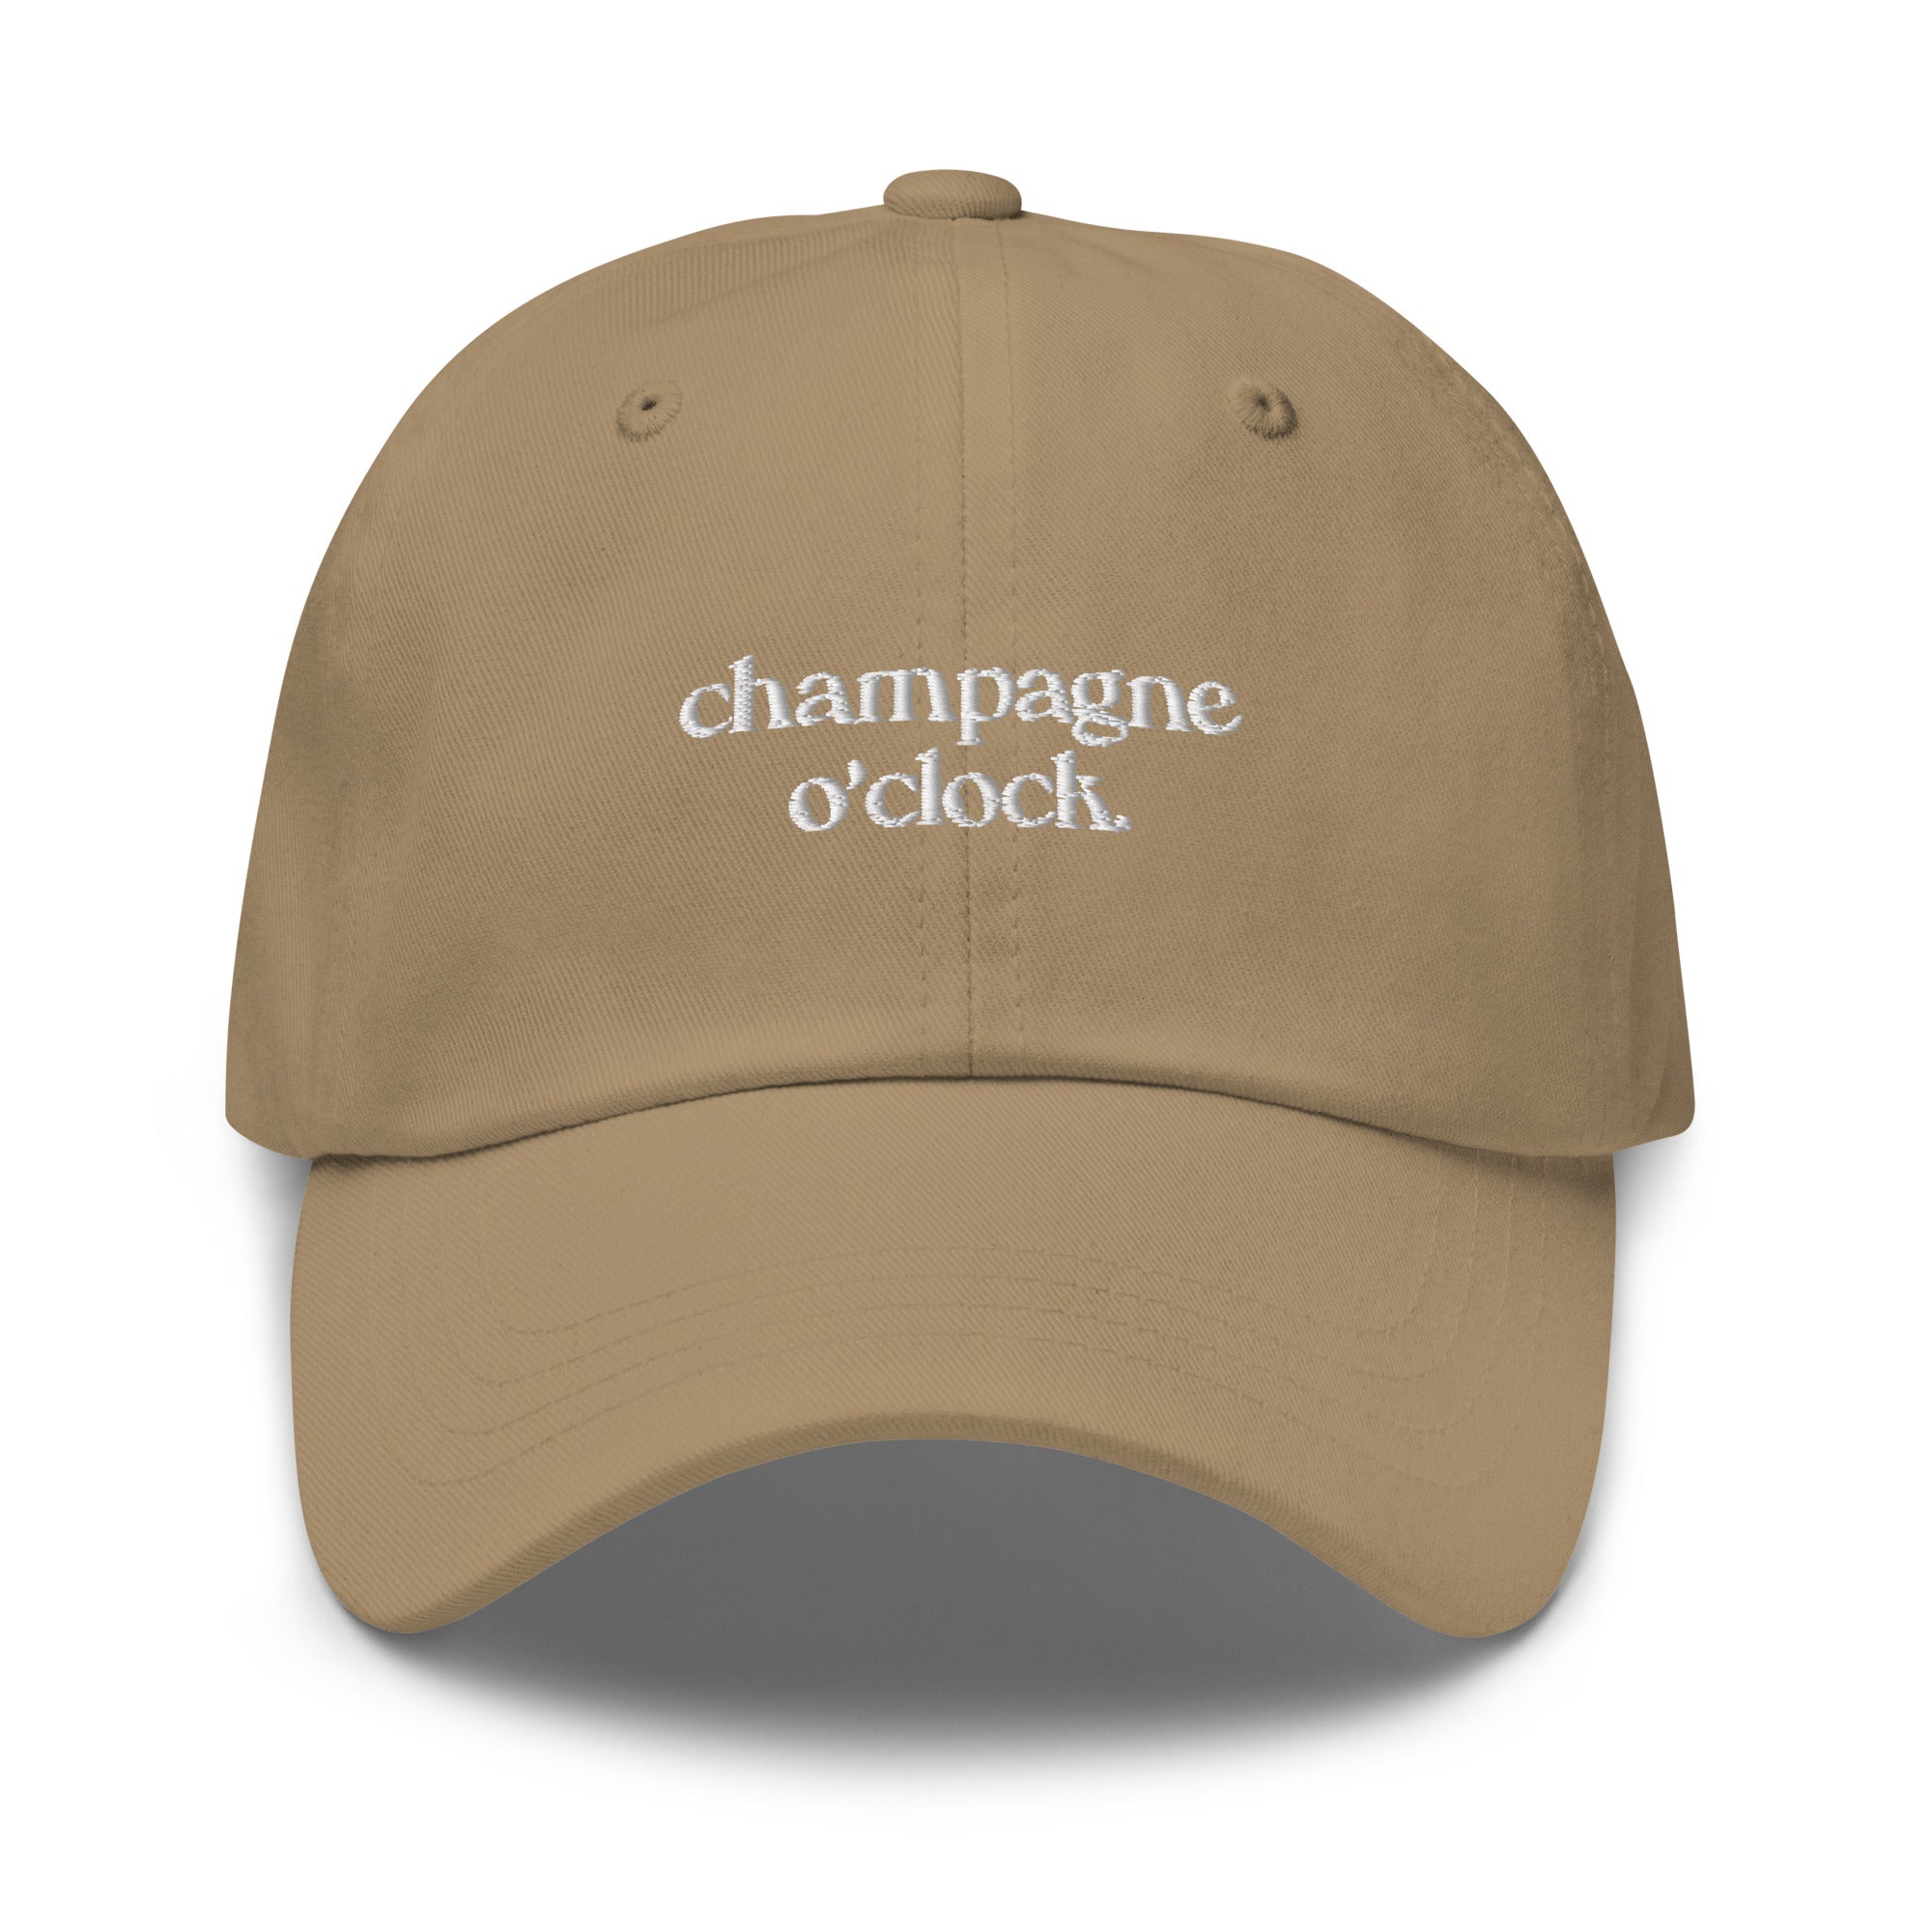 Champagne o'clock - Dad hat